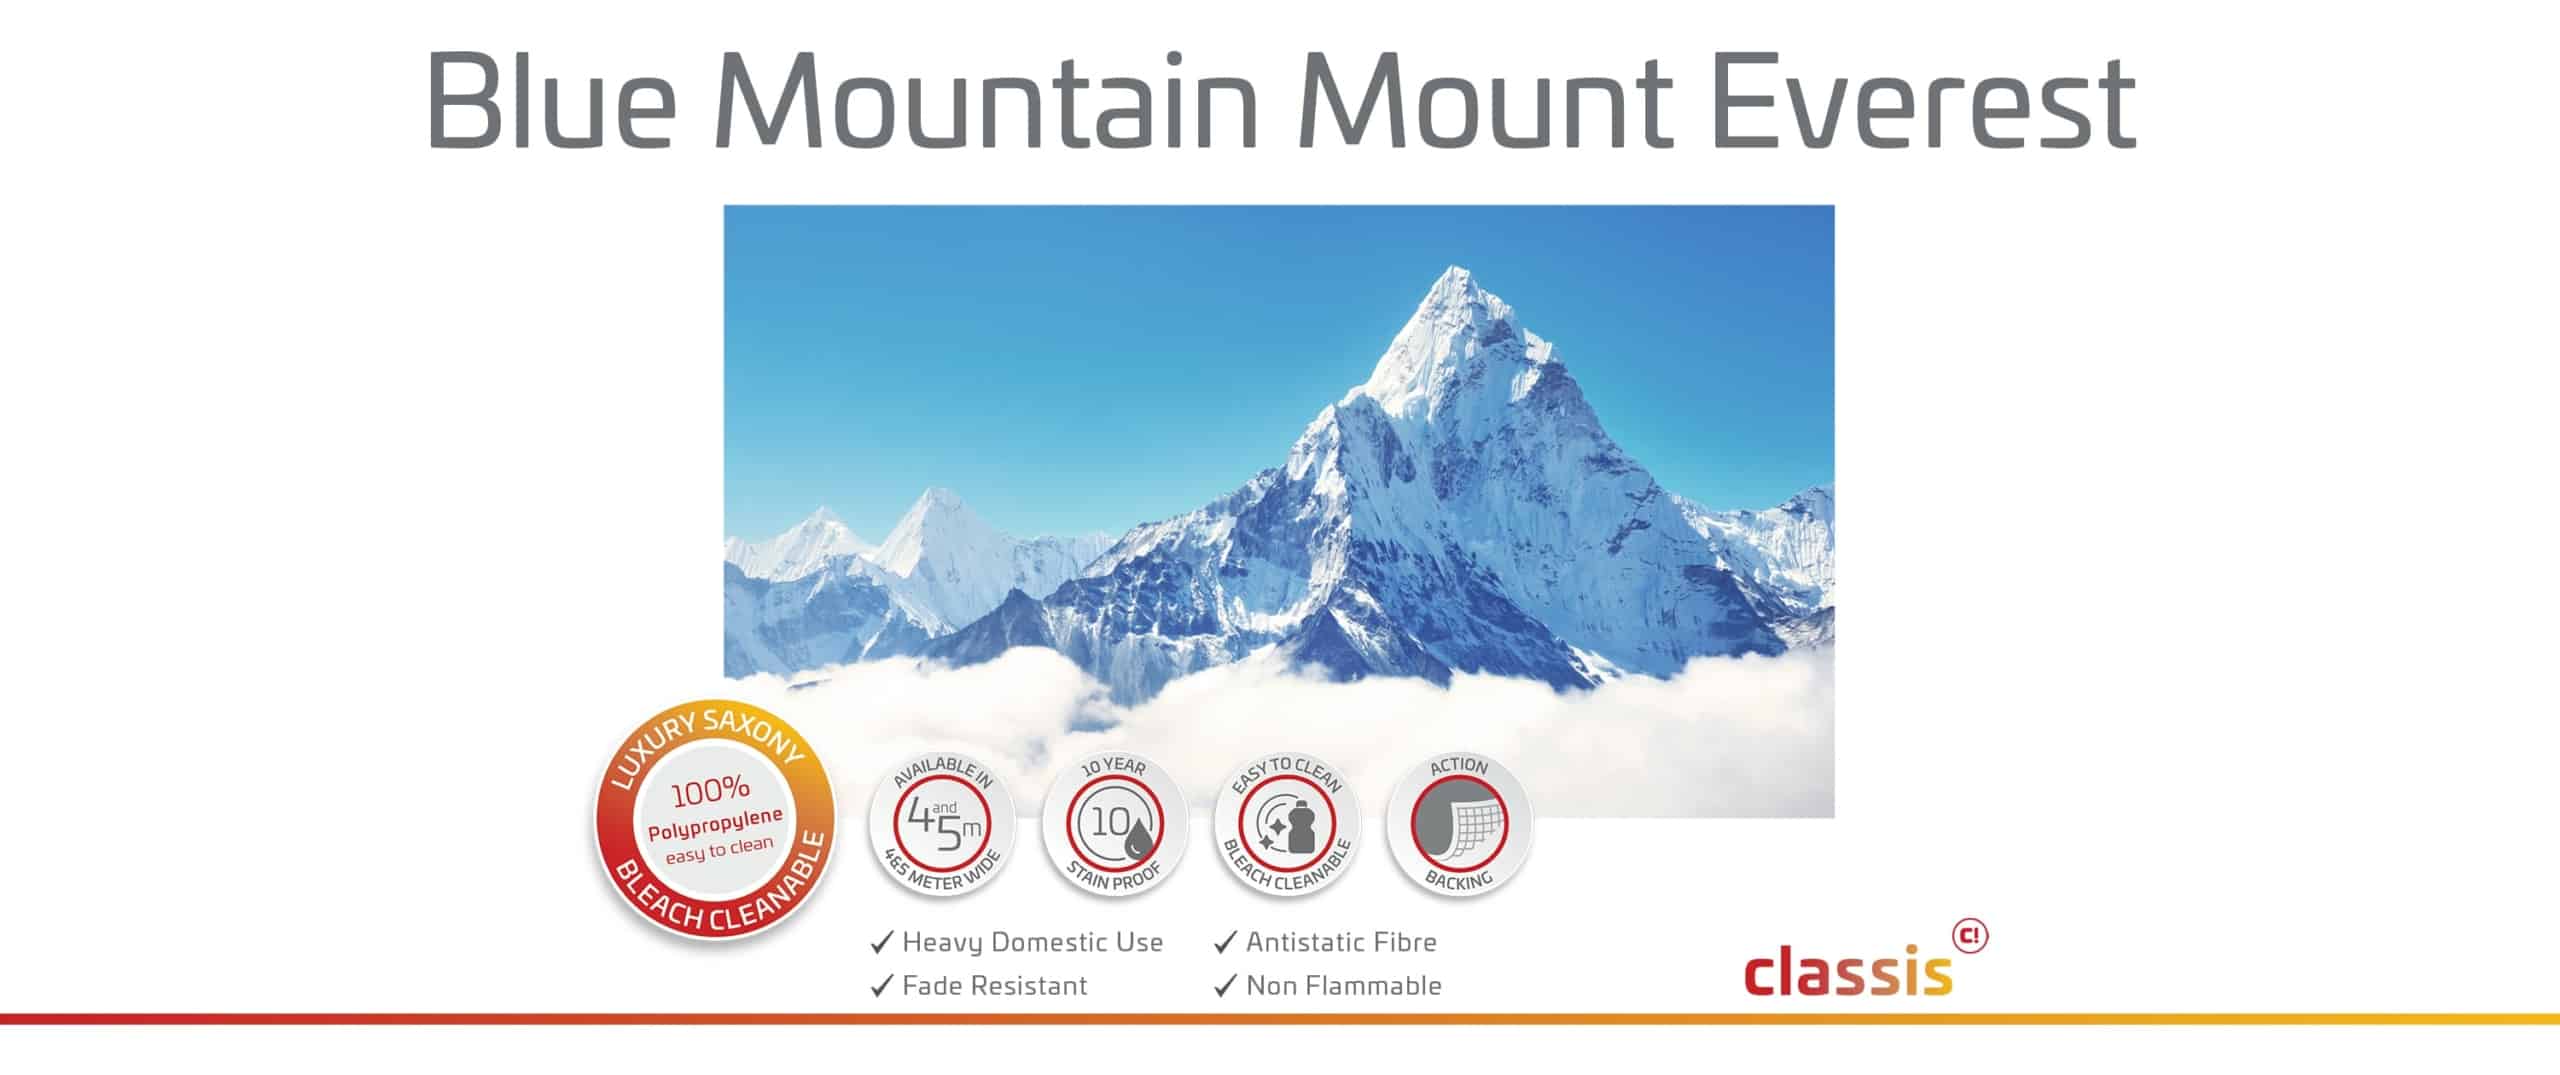 Blauer Berg Mount Everest Website 3000x1260px